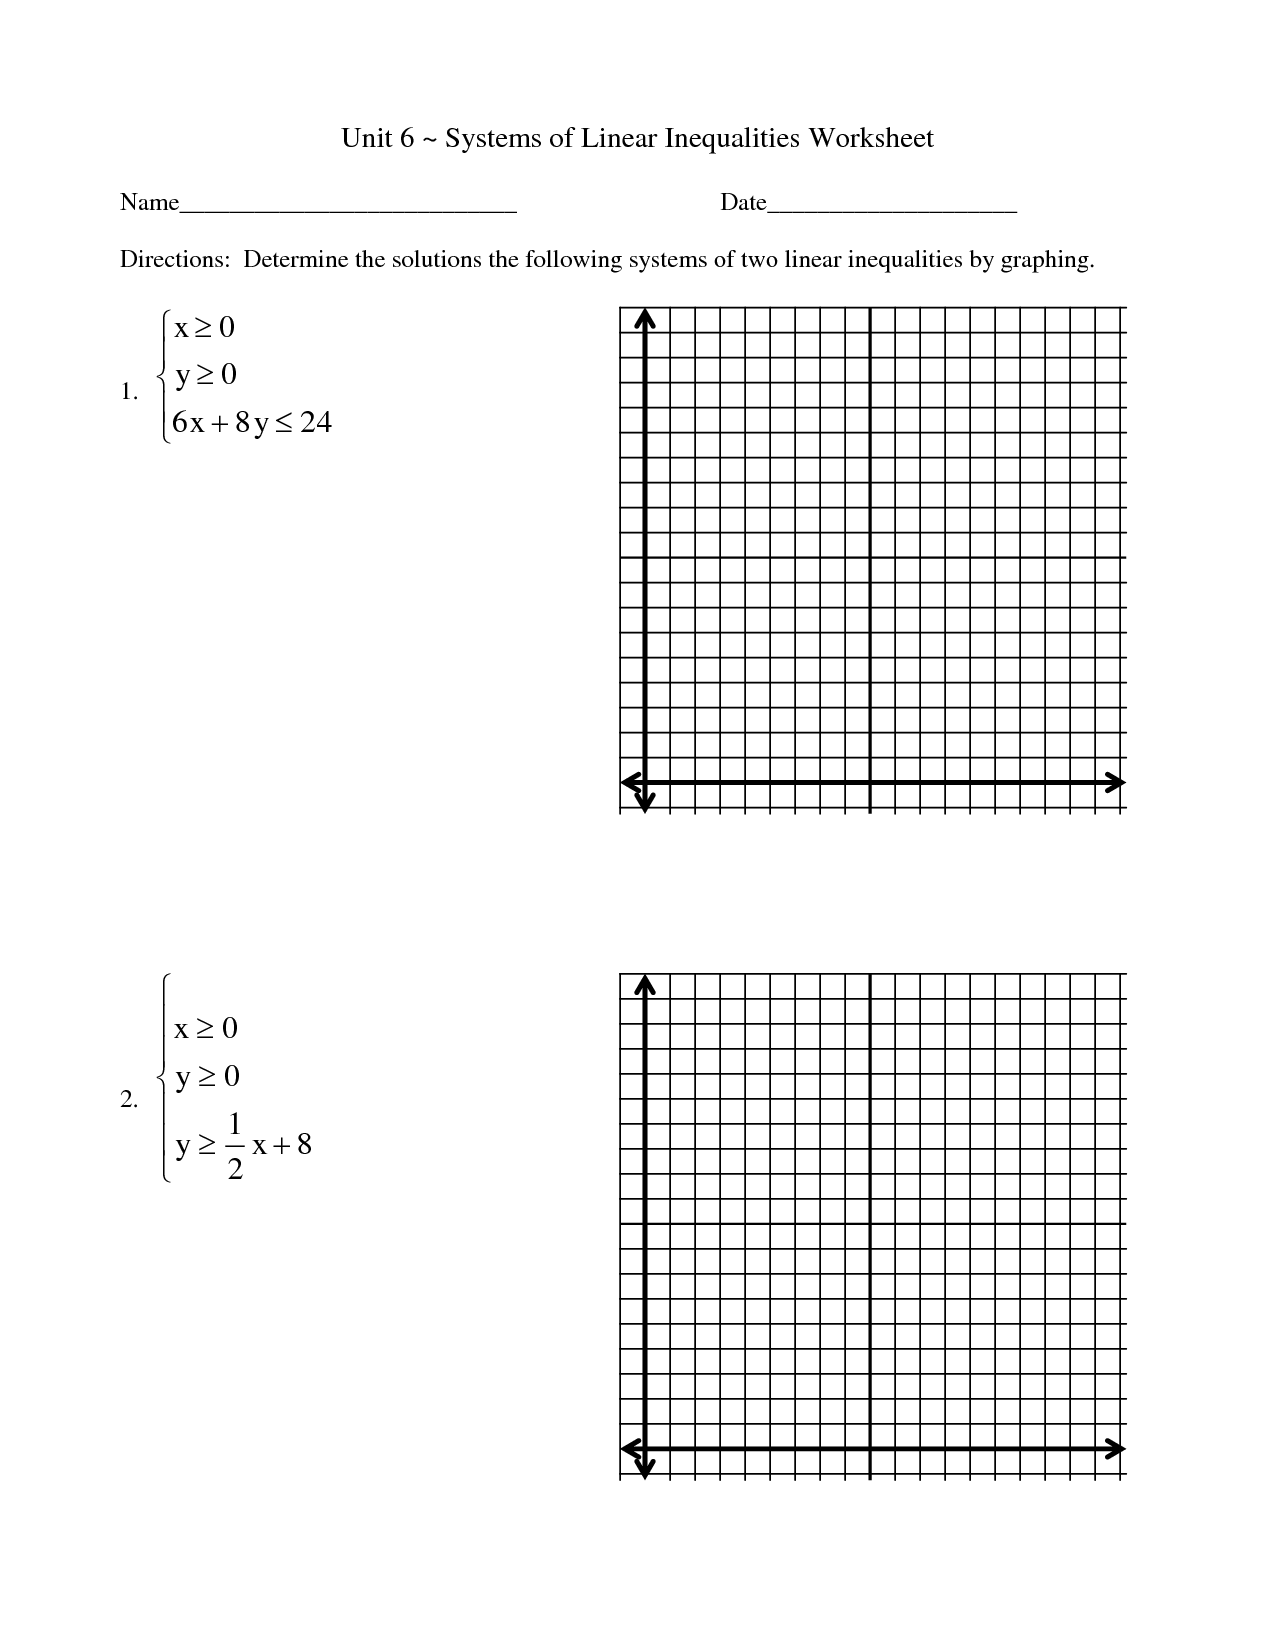 Graphing Linear Inequalities Worksheet Image